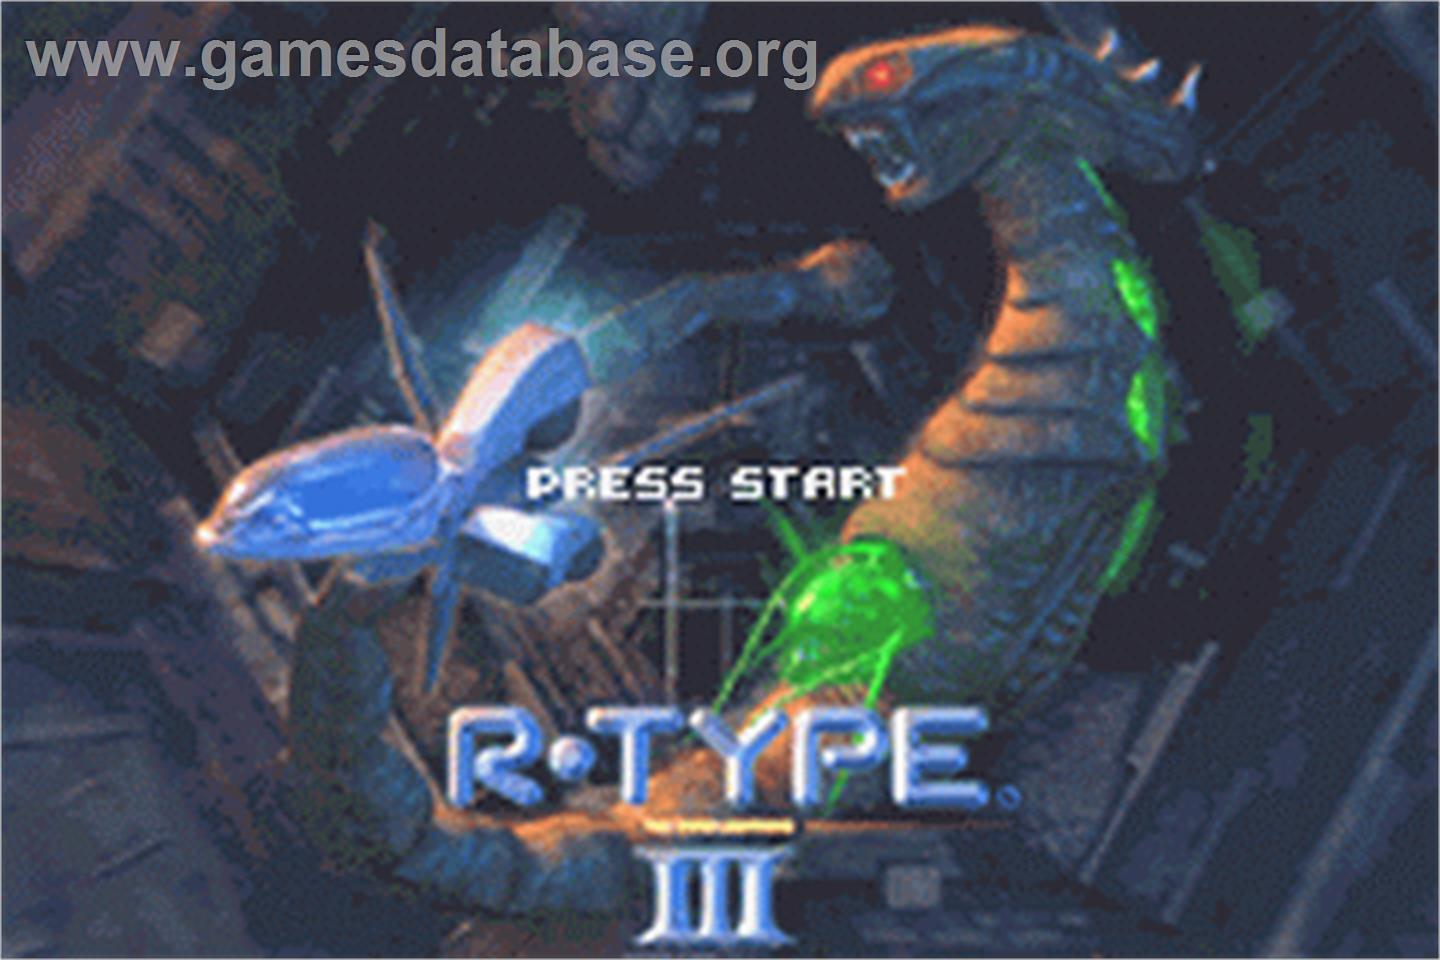 R-Type III: The Third Lightning - Nintendo Game Boy Advance - Artwork - Title Screen